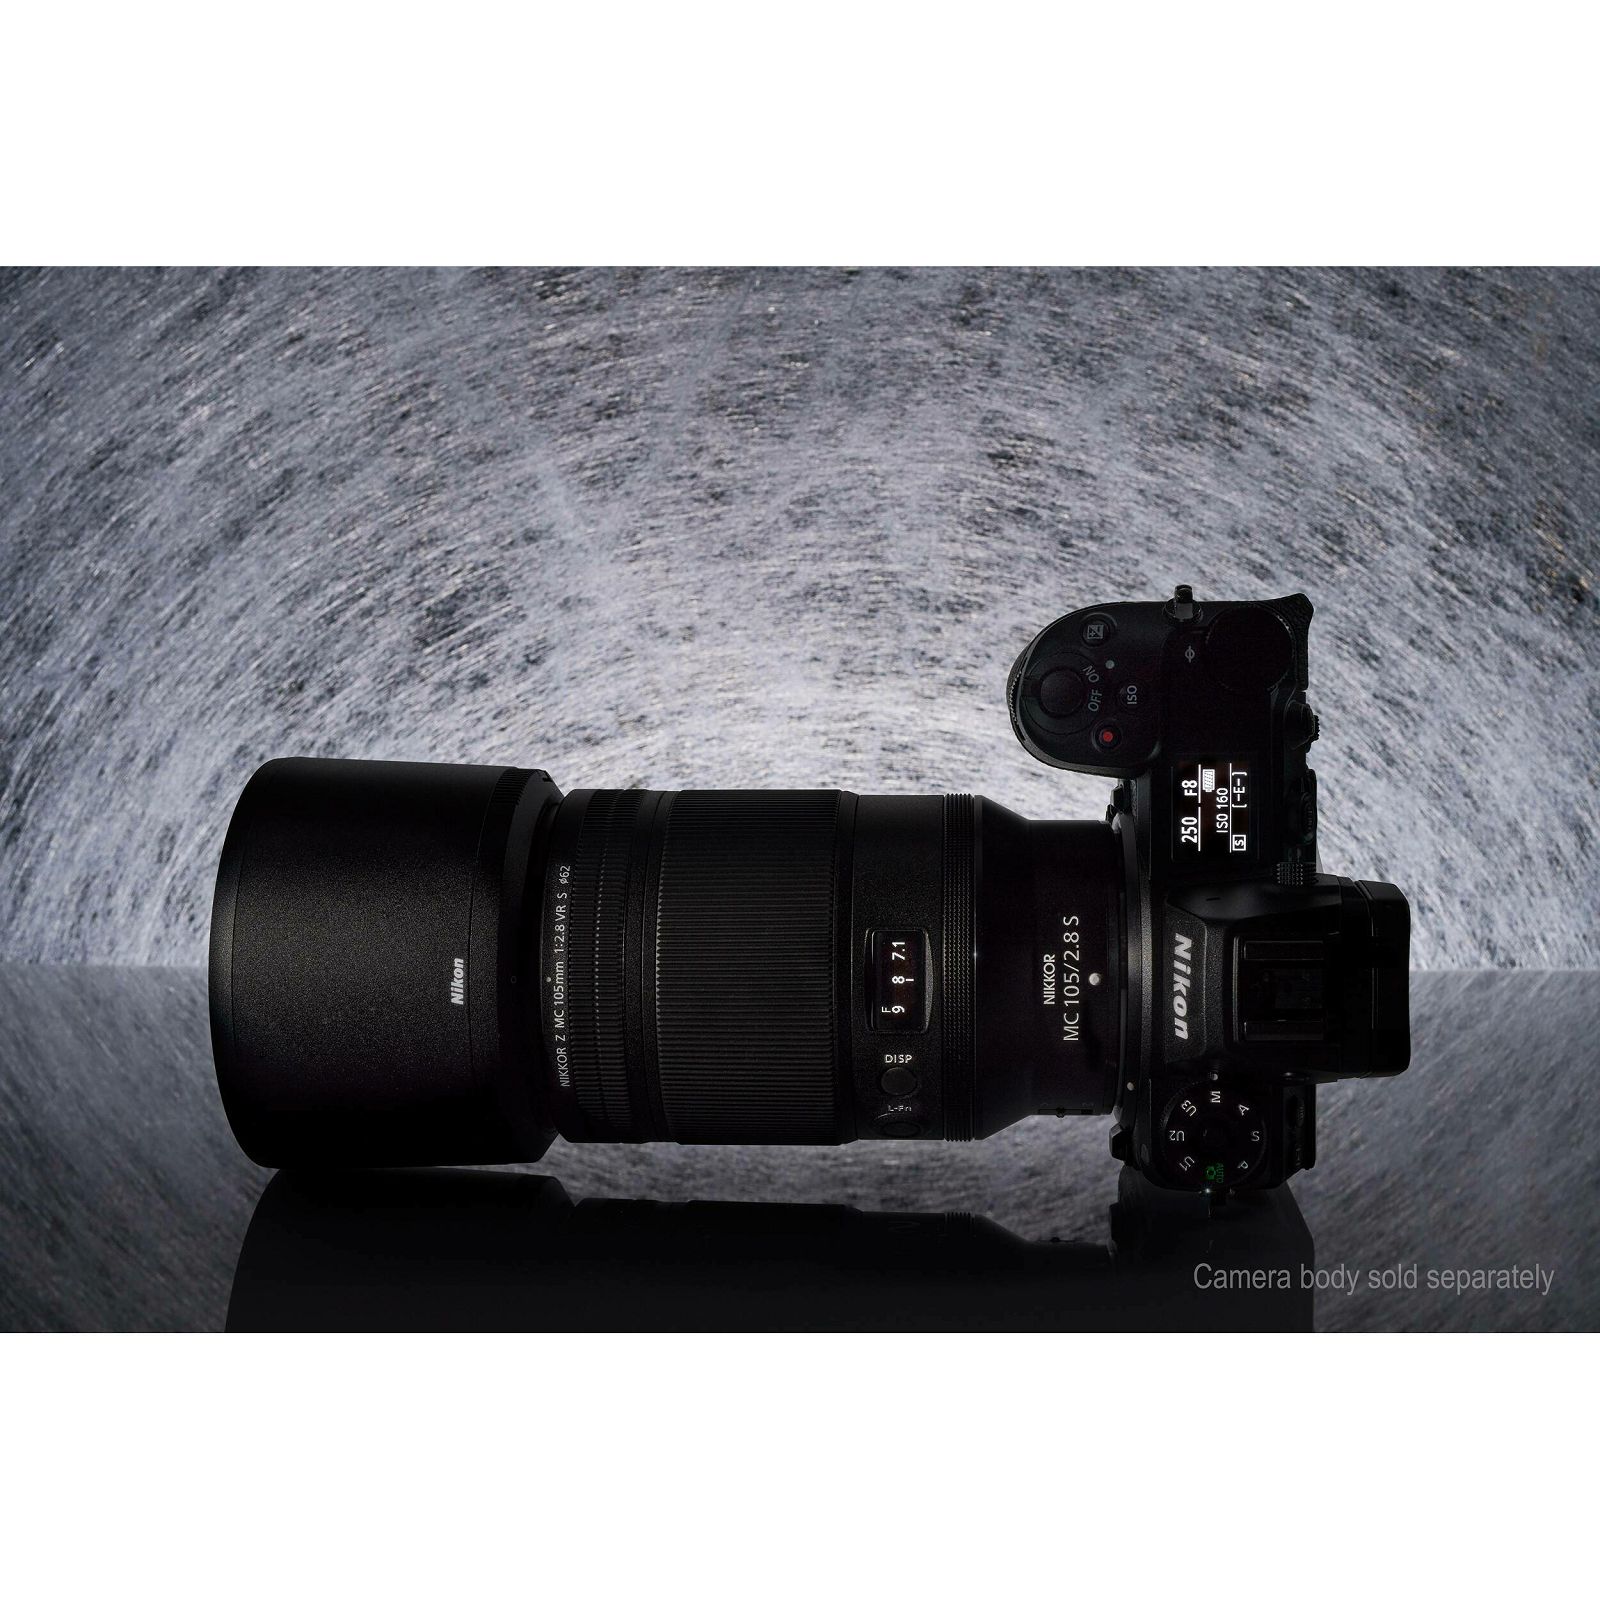 Nikon Z MC 105mm f/2.8 VR S macro objektiv (JMA602DA)